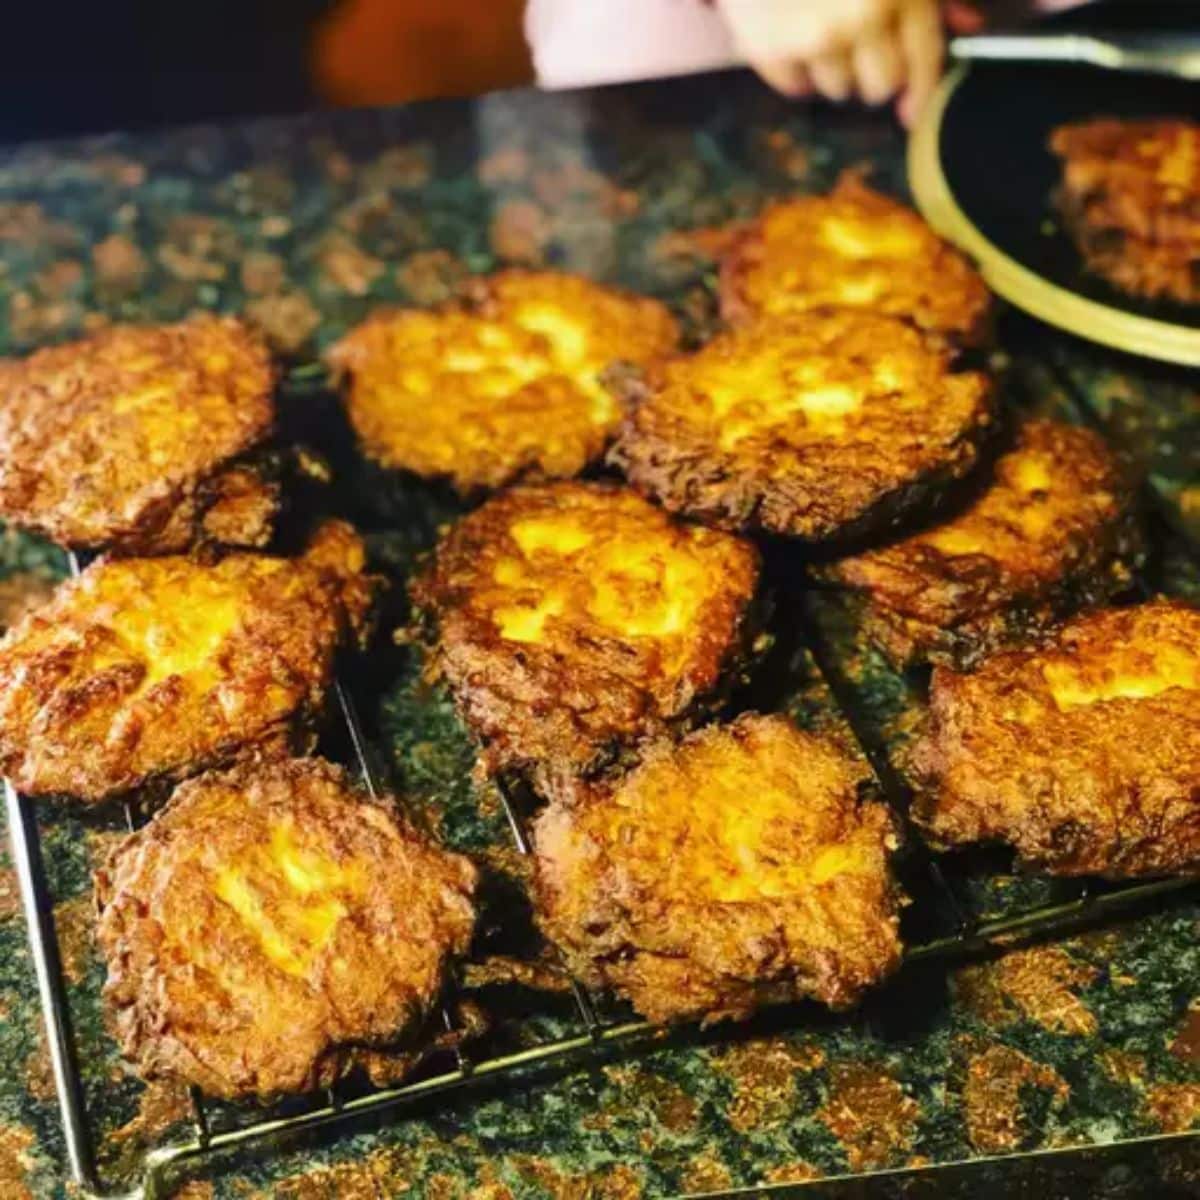 Crispy potato pancakes on a baking grid.